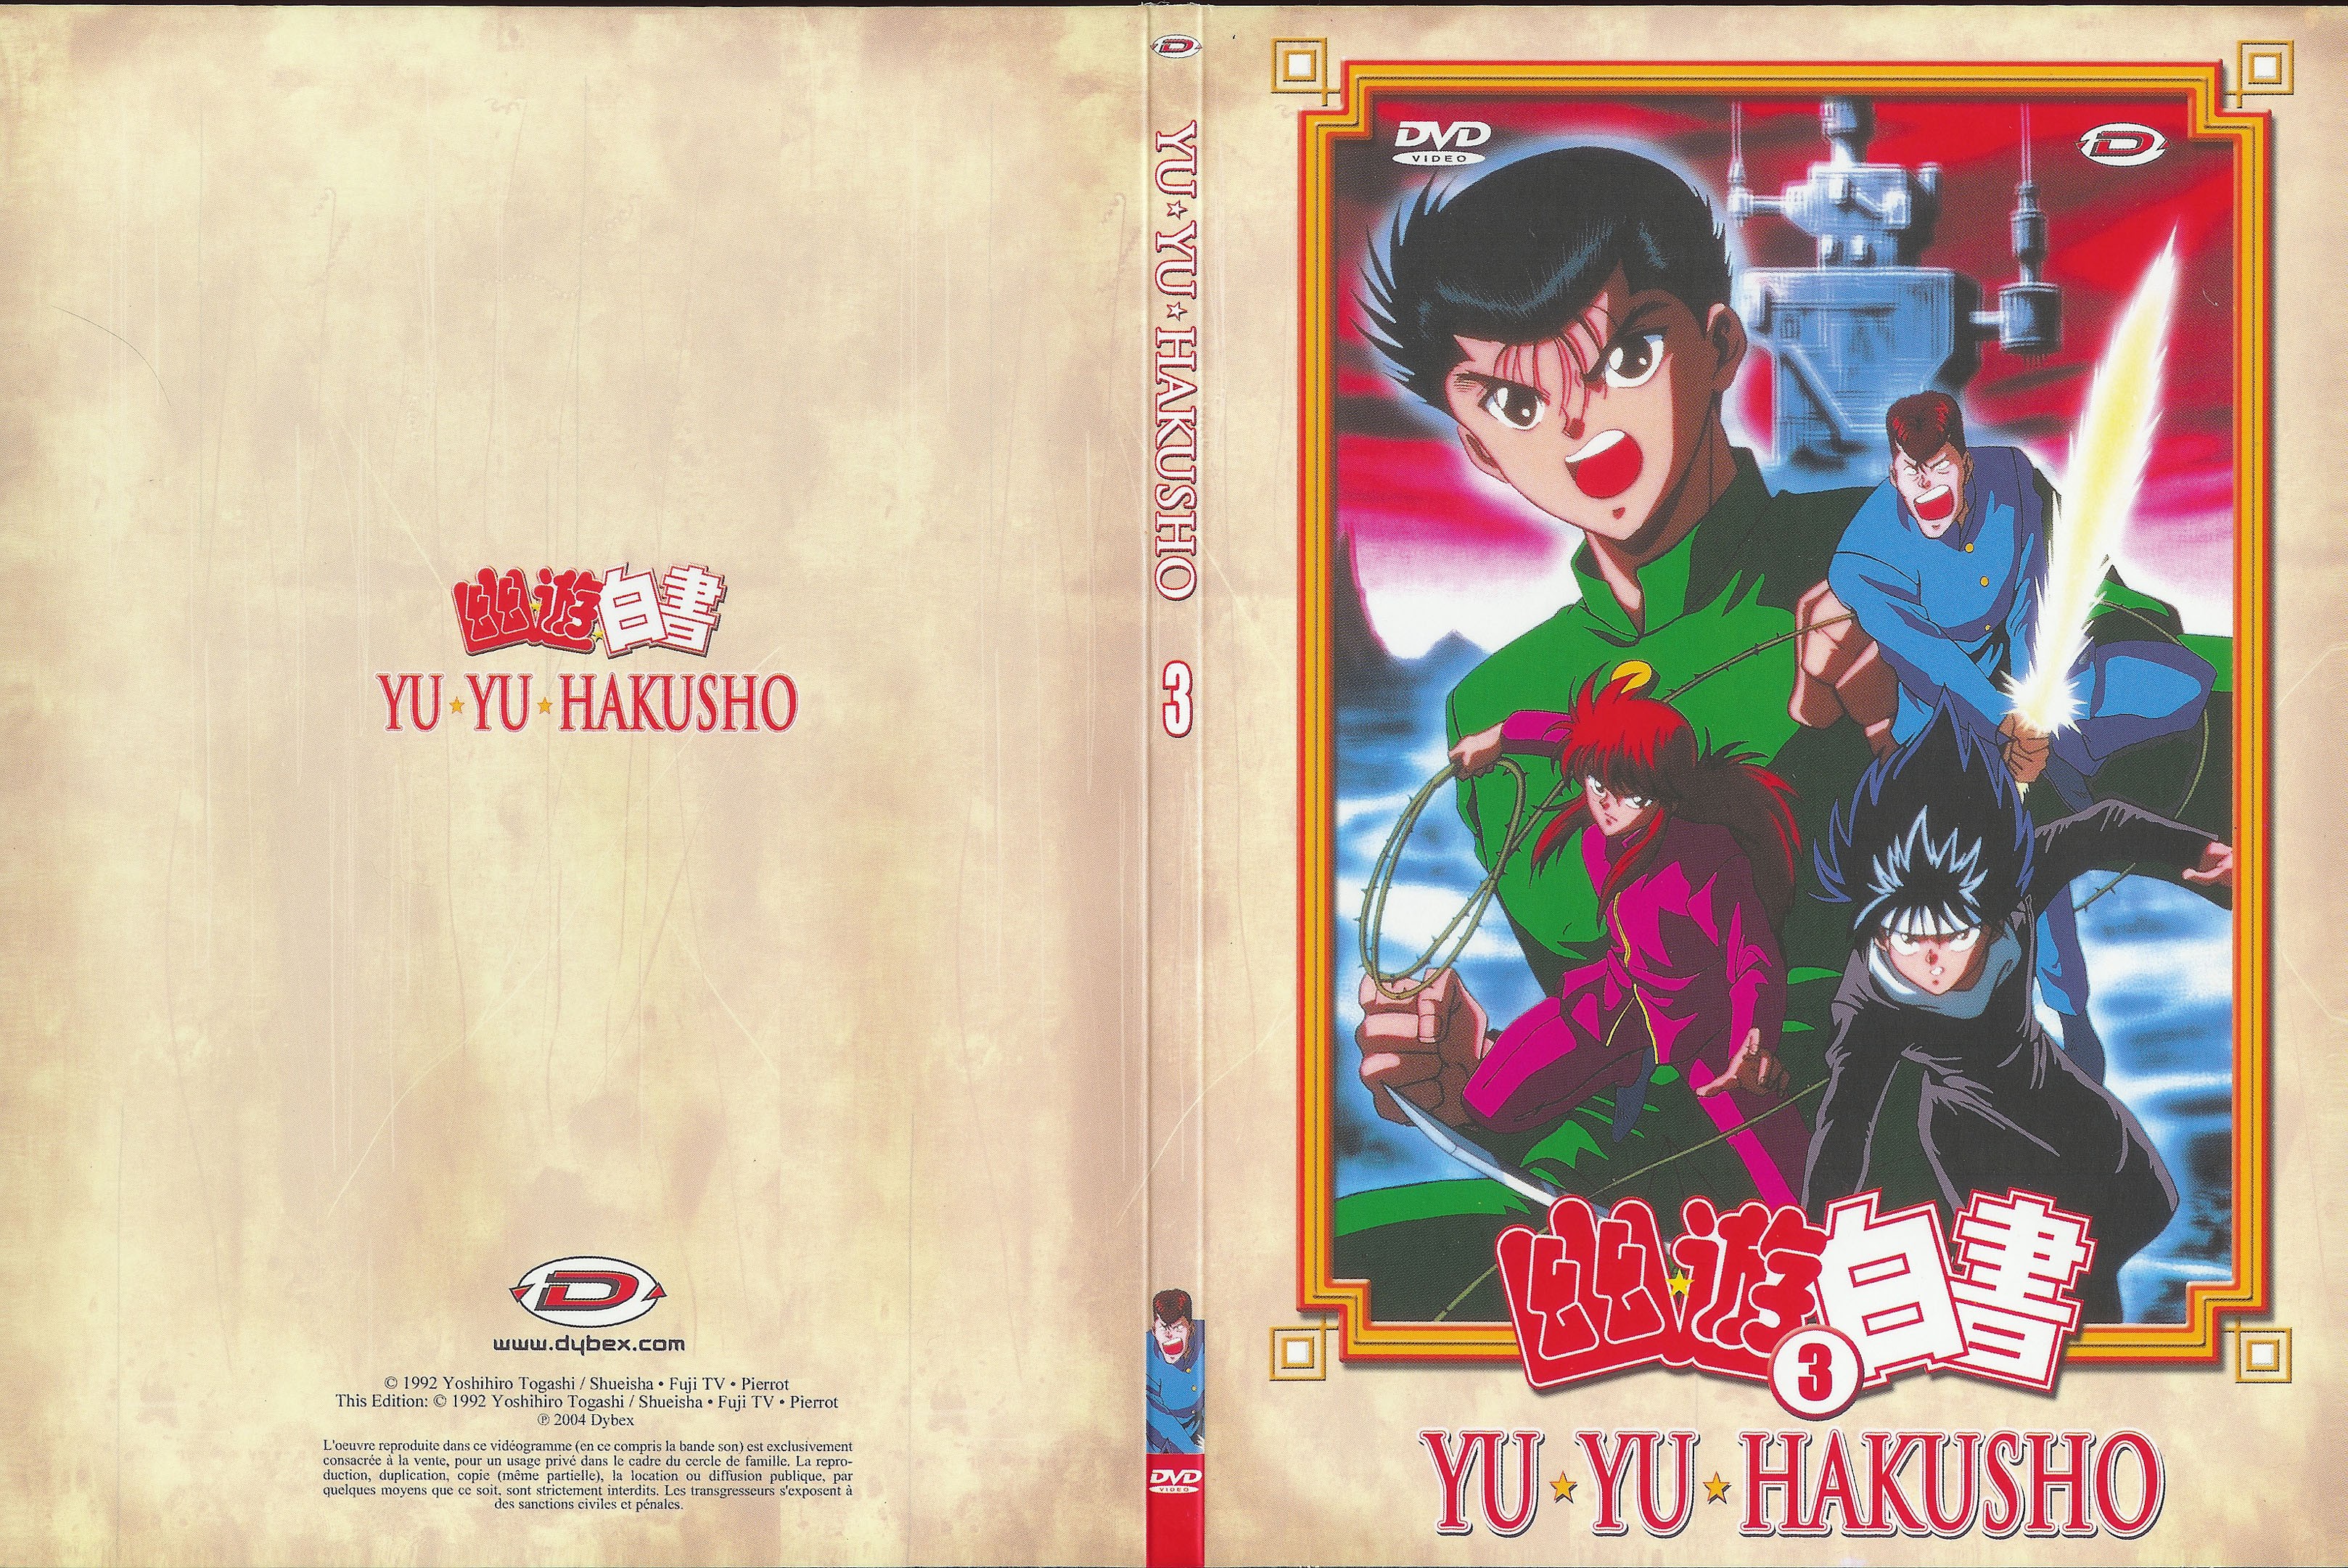 Jaquette DVD Yu yu hakusho vol 03